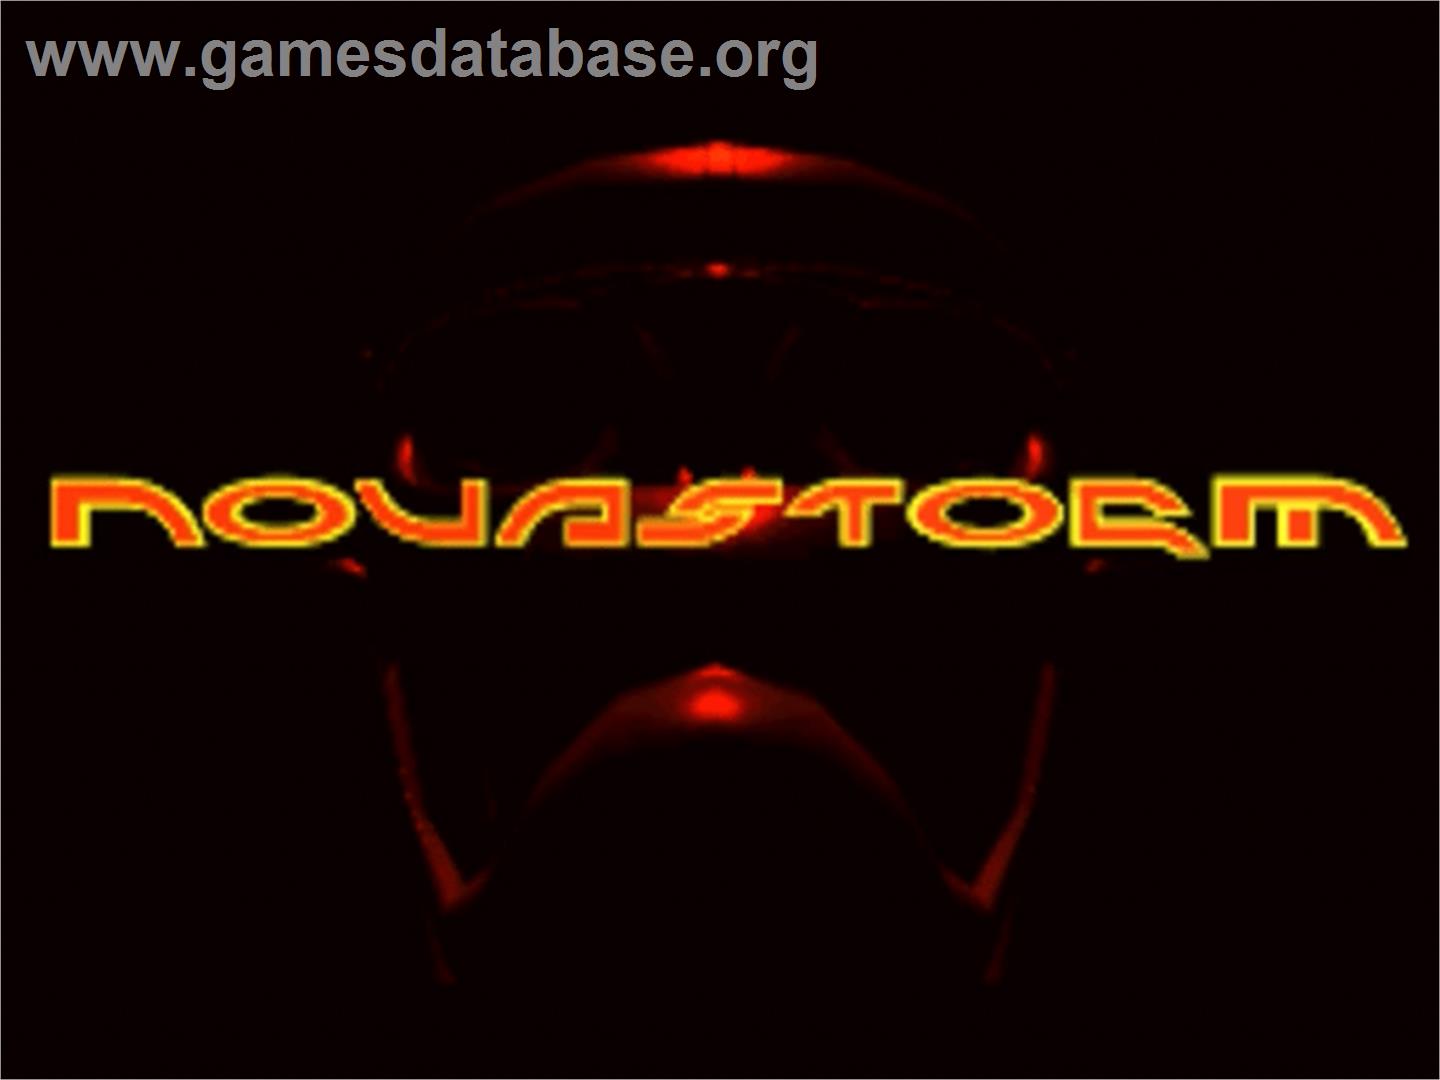 Novastorm - Panasonic 3DO - Artwork - Title Screen